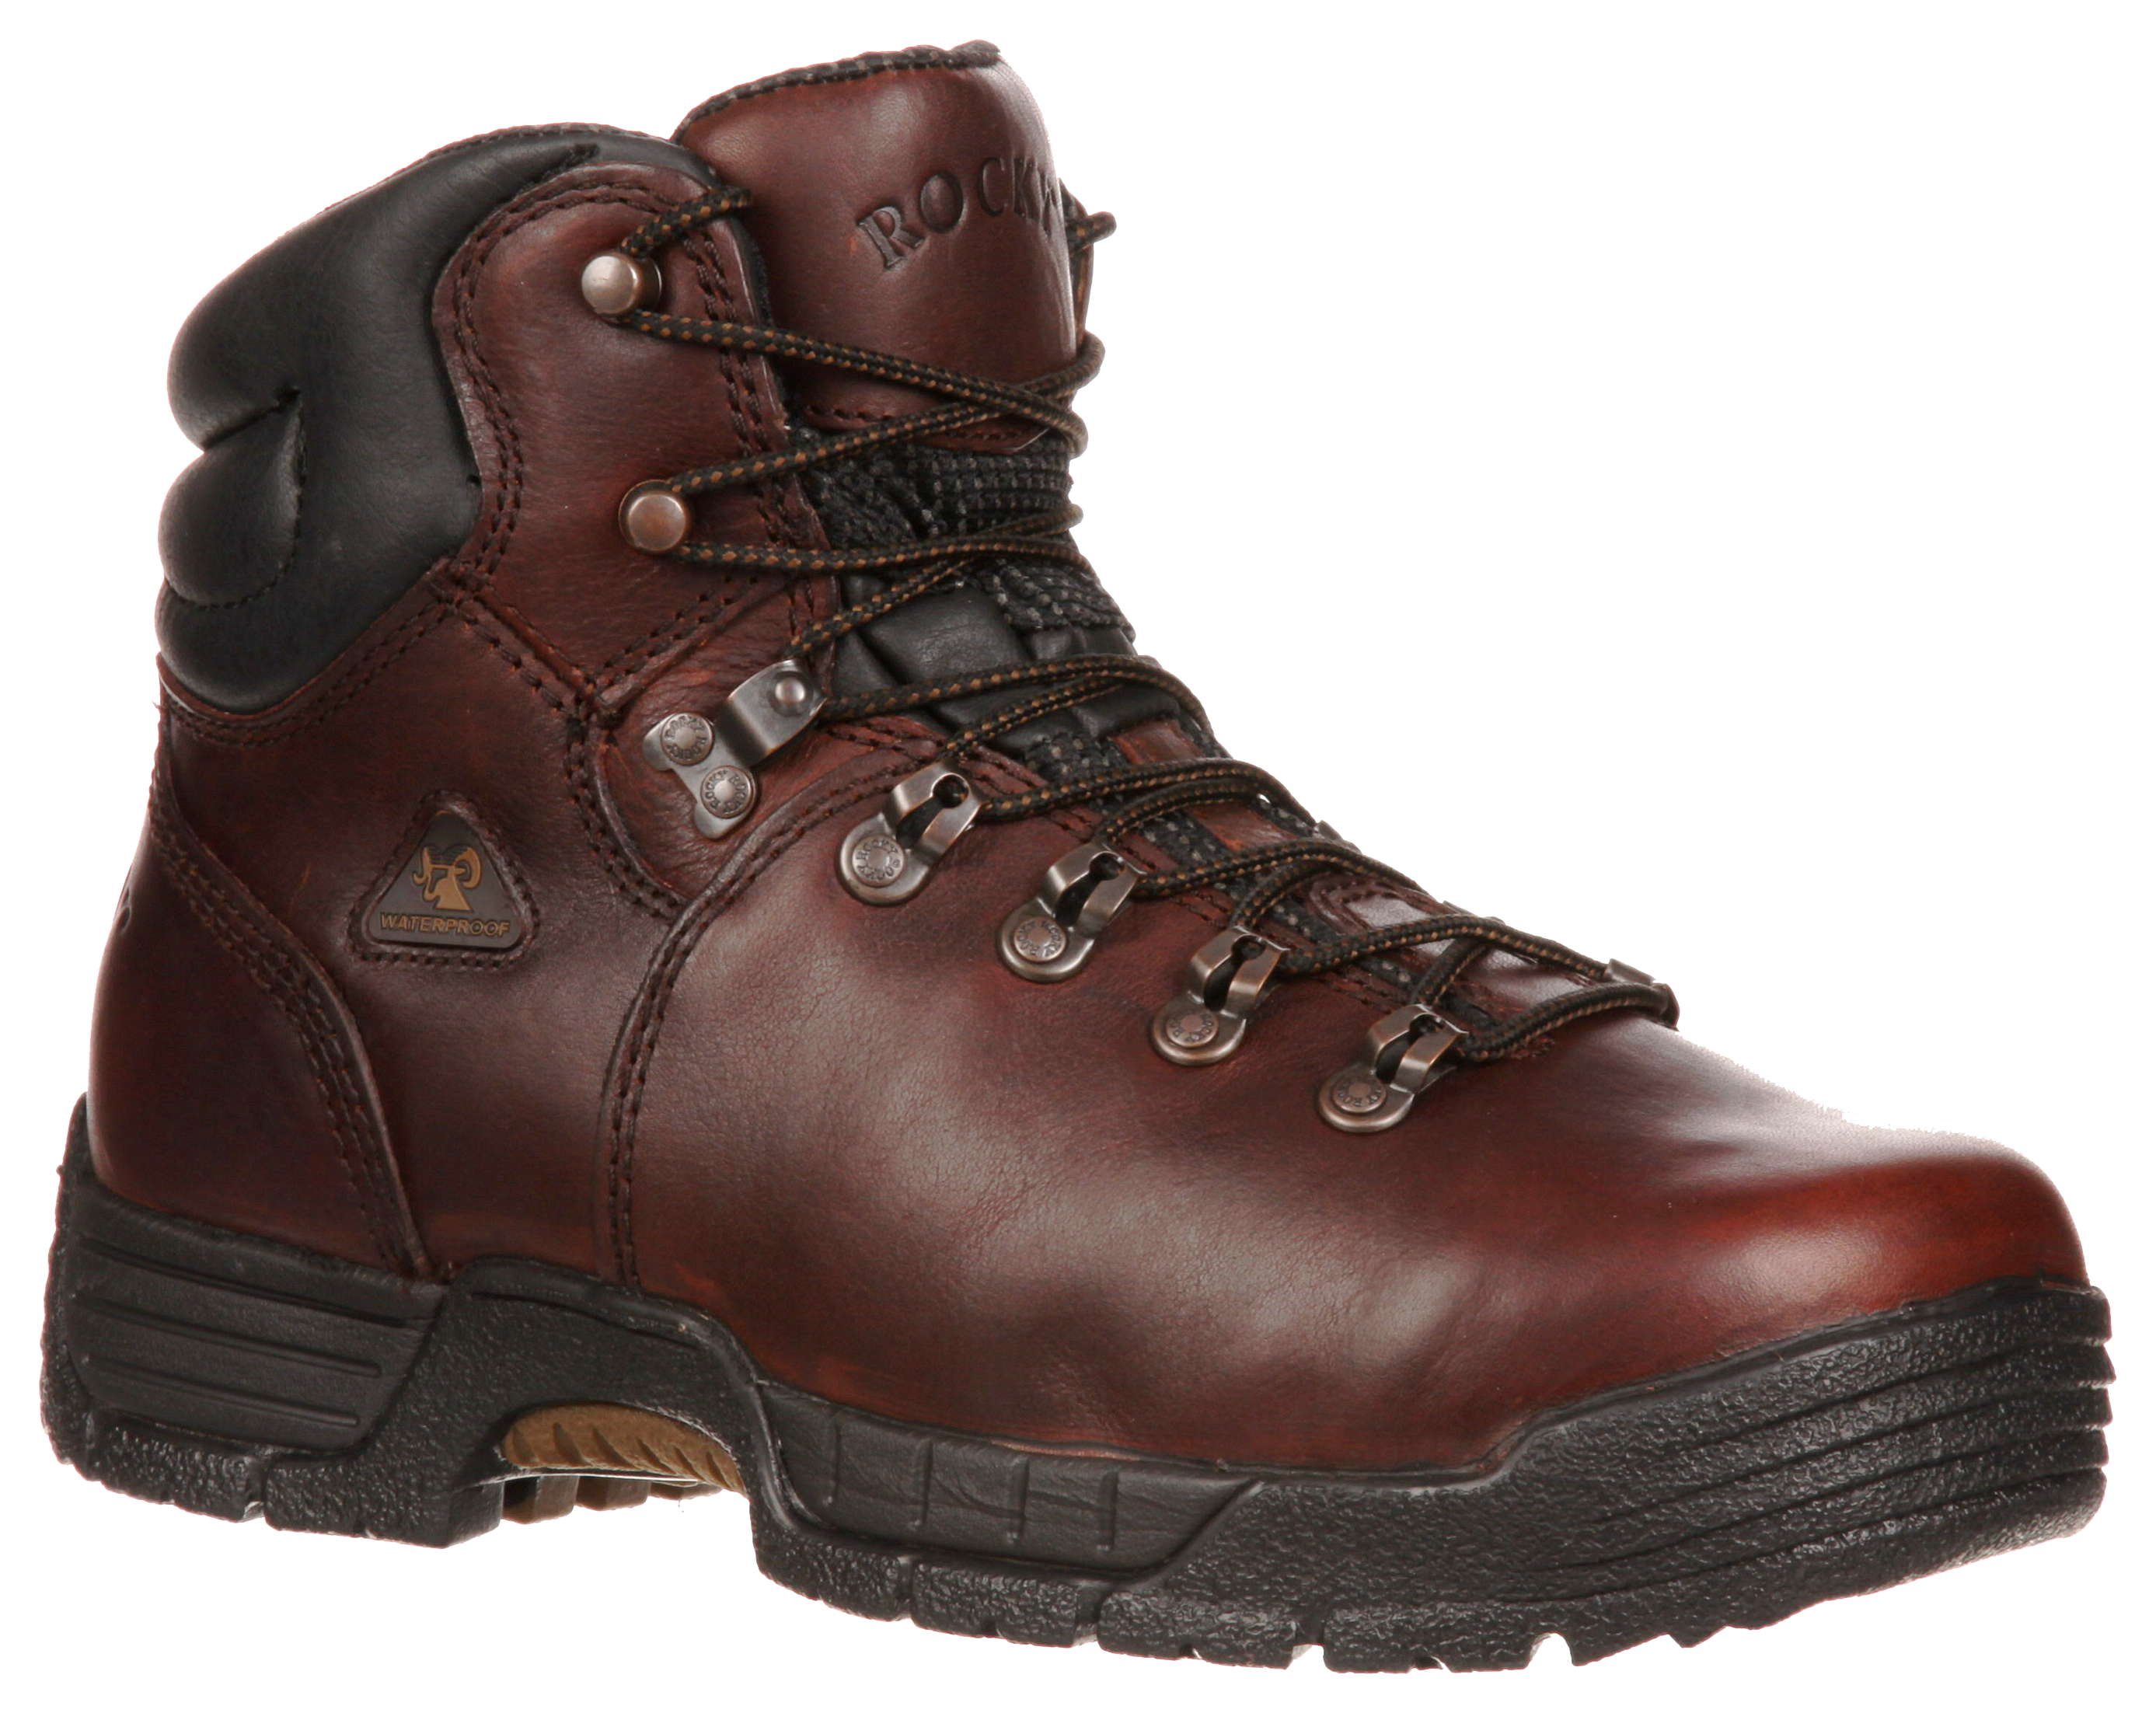 ROCKY MobiLite Waterproof Steel Toe Work Boots for Men - Brown - 15 M